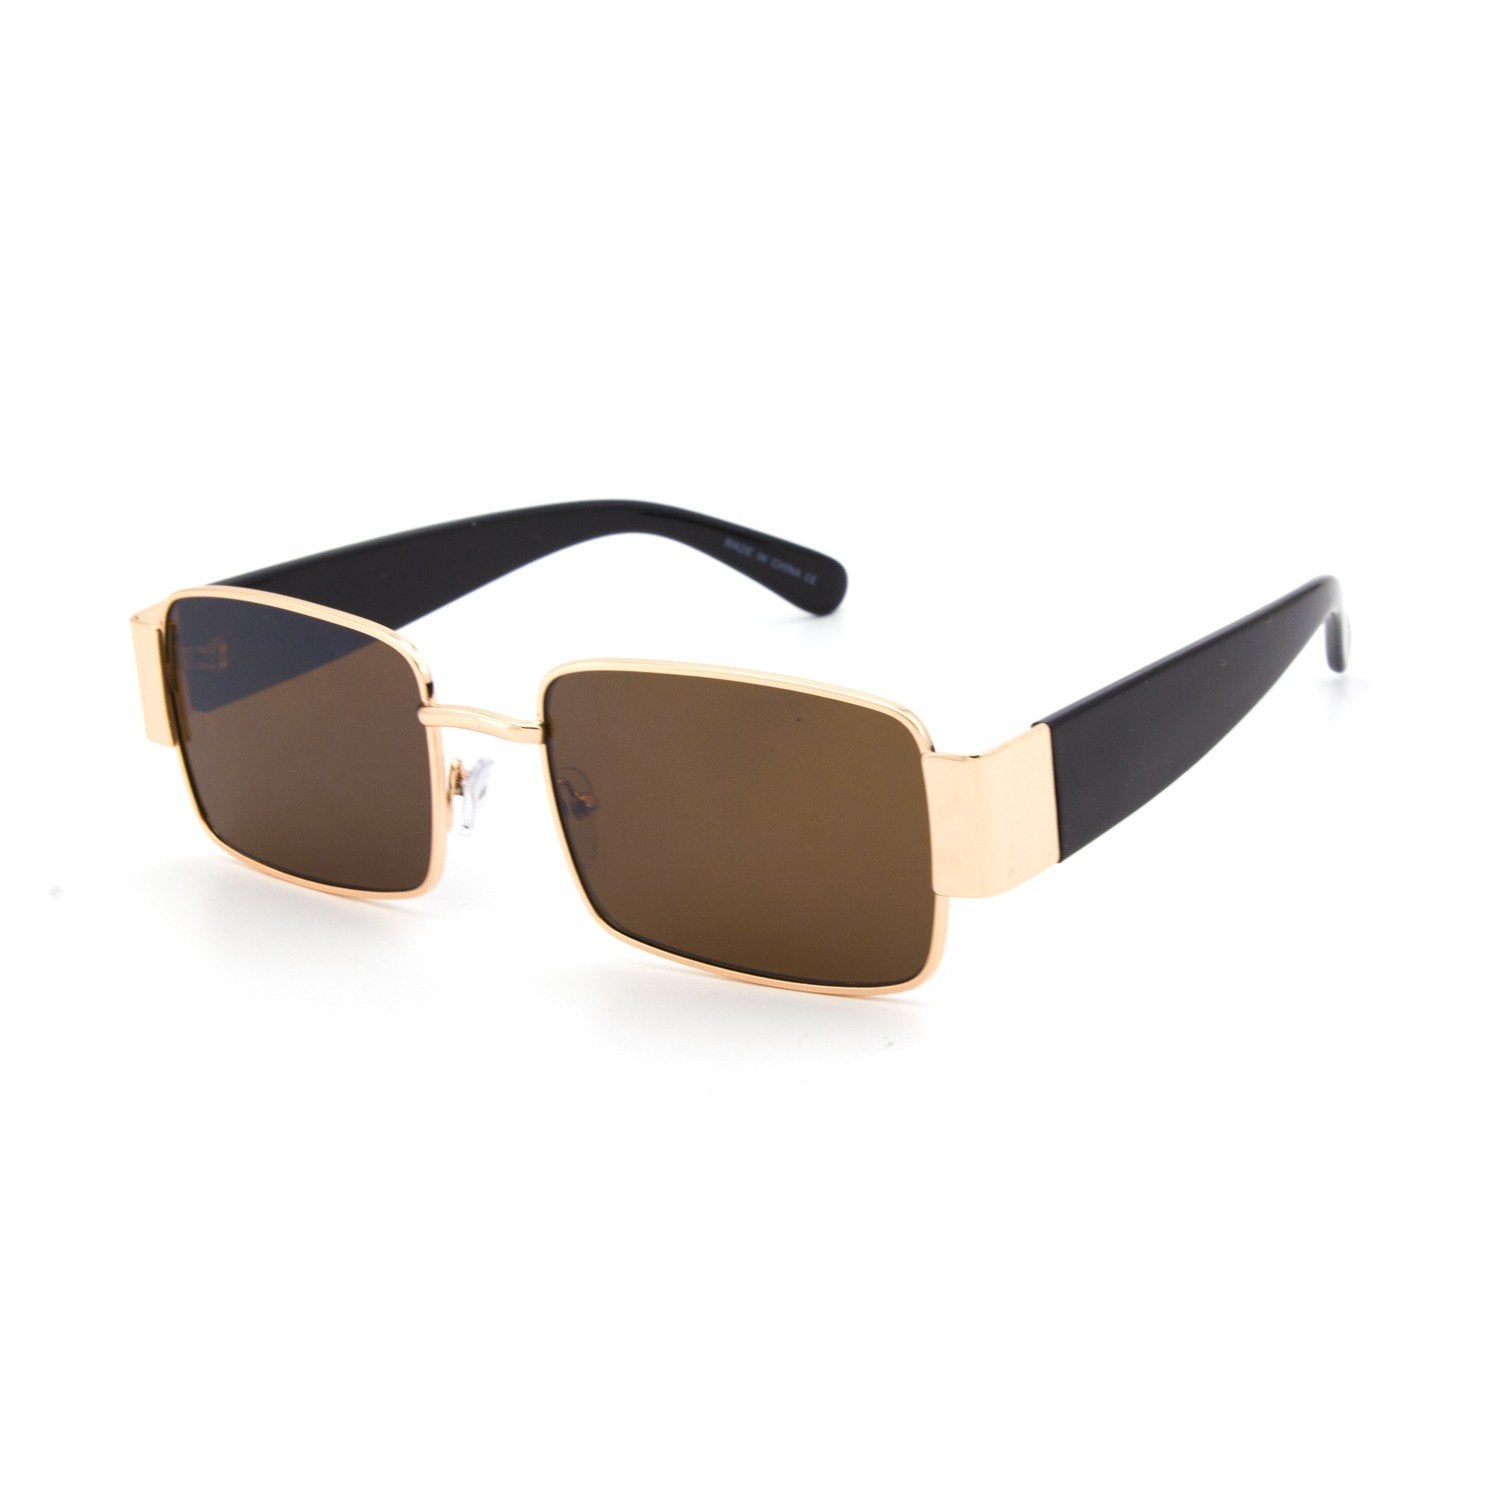 "Basic Essential" Metal Sunglasses - Weekend Shade Sunglasses